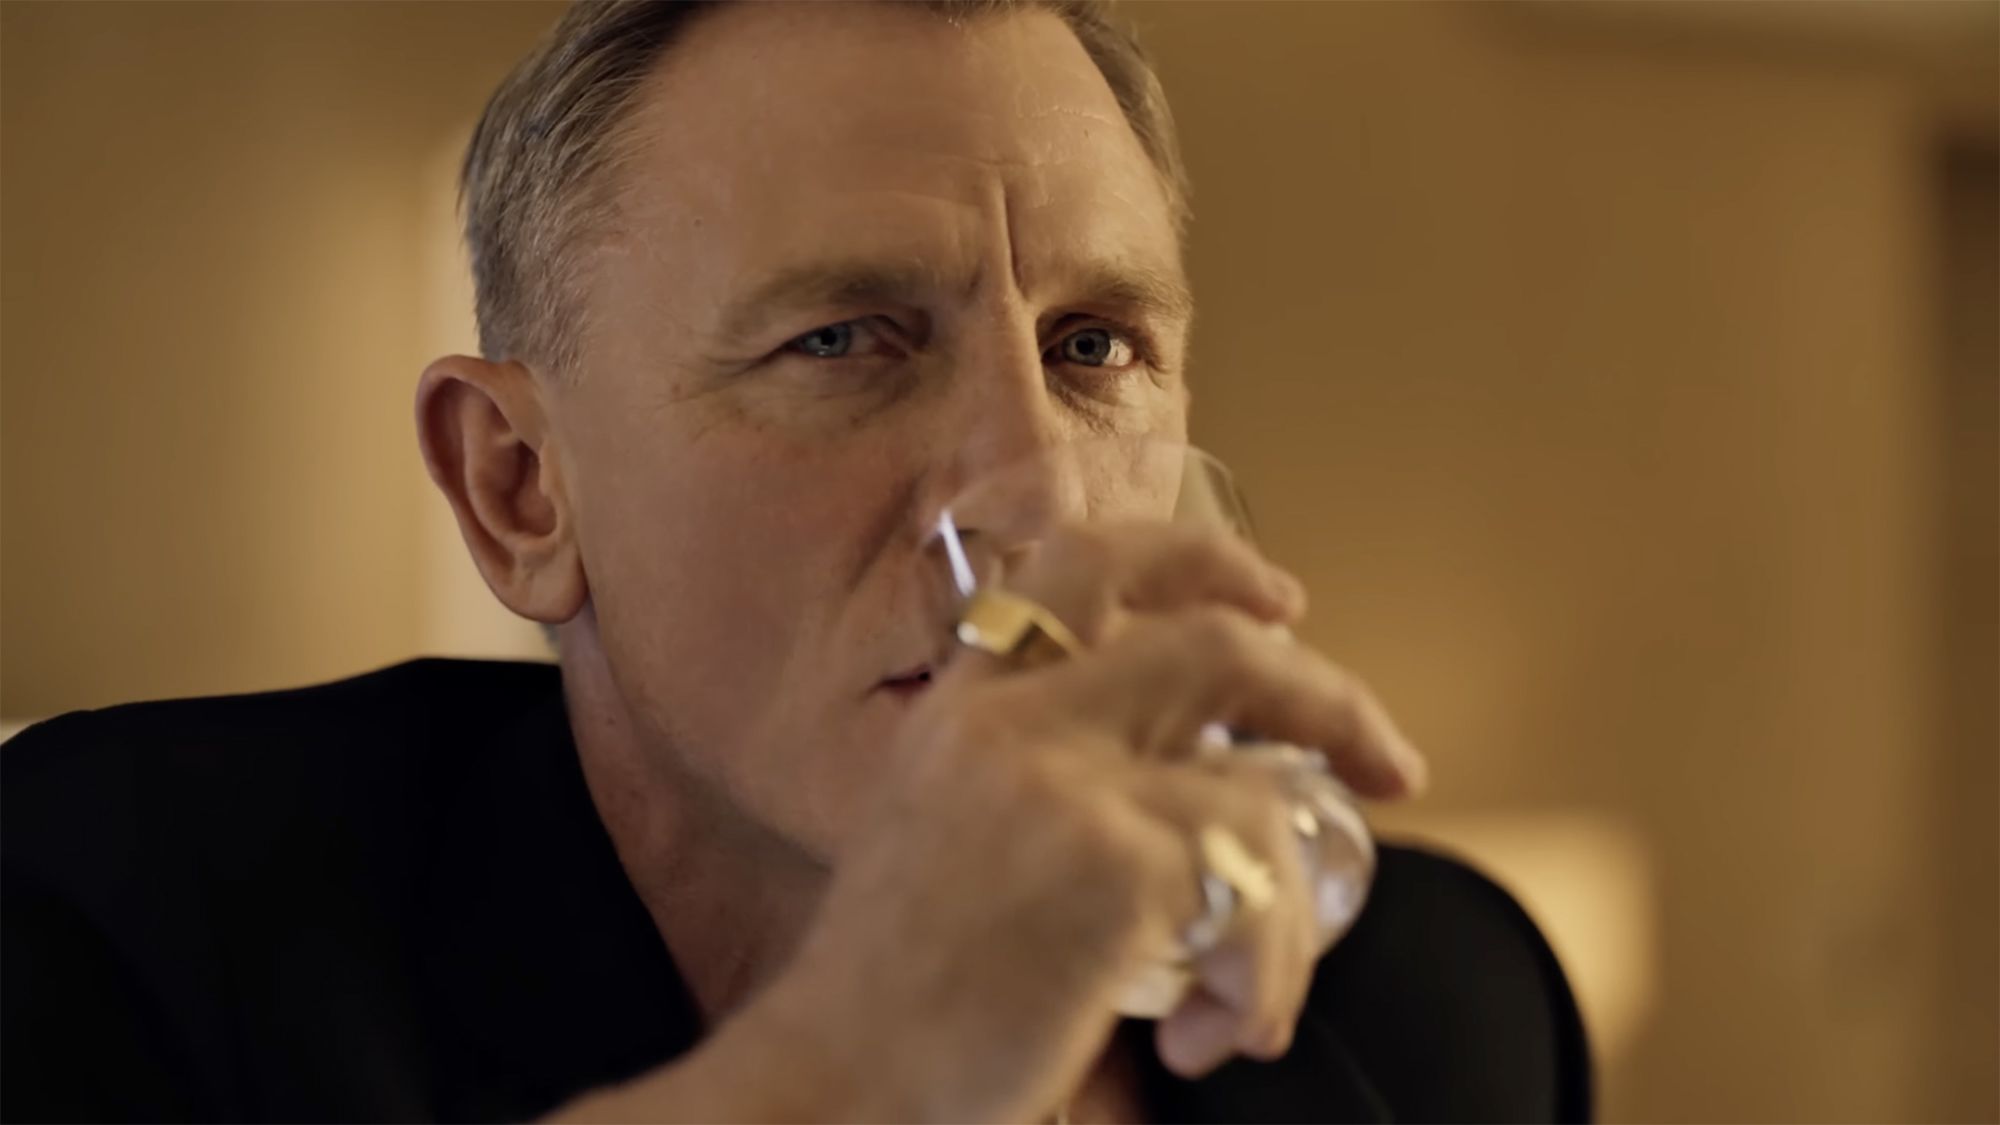 Daniel Craig shakes off serious Bond persona in new vodka ad, Entertainment